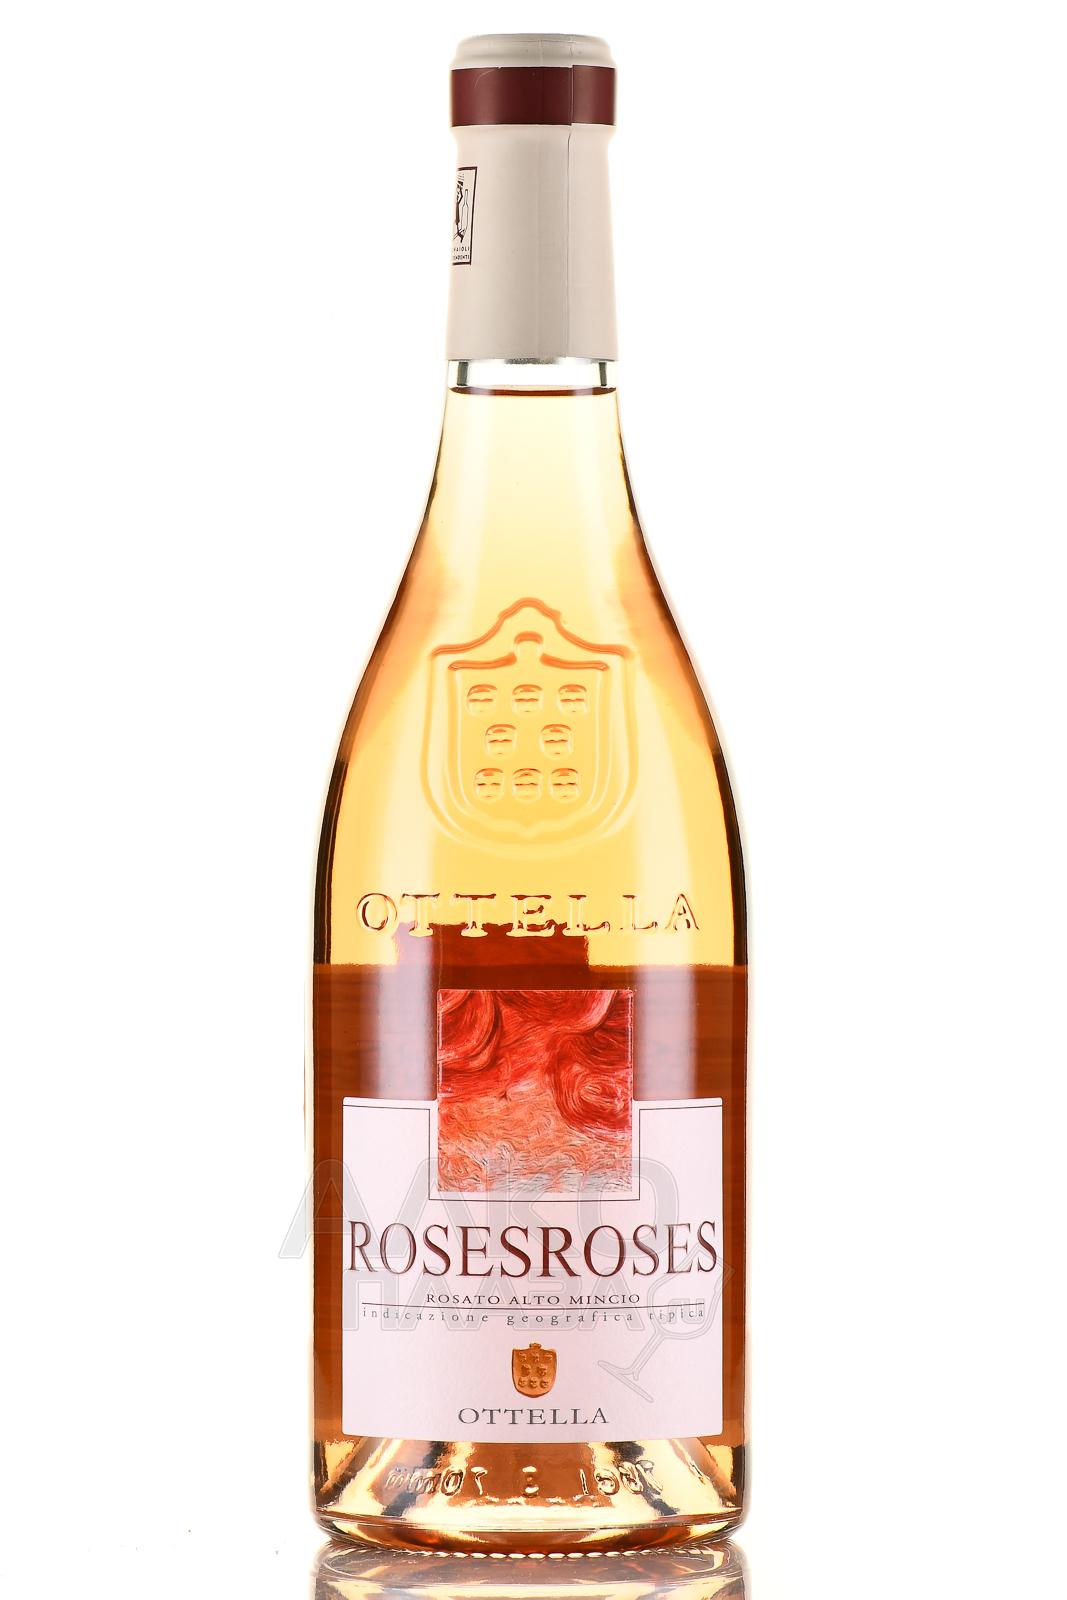 Ottella Roses Roses - вино Оттелла Розес Розес 0.75 л розовое сухое